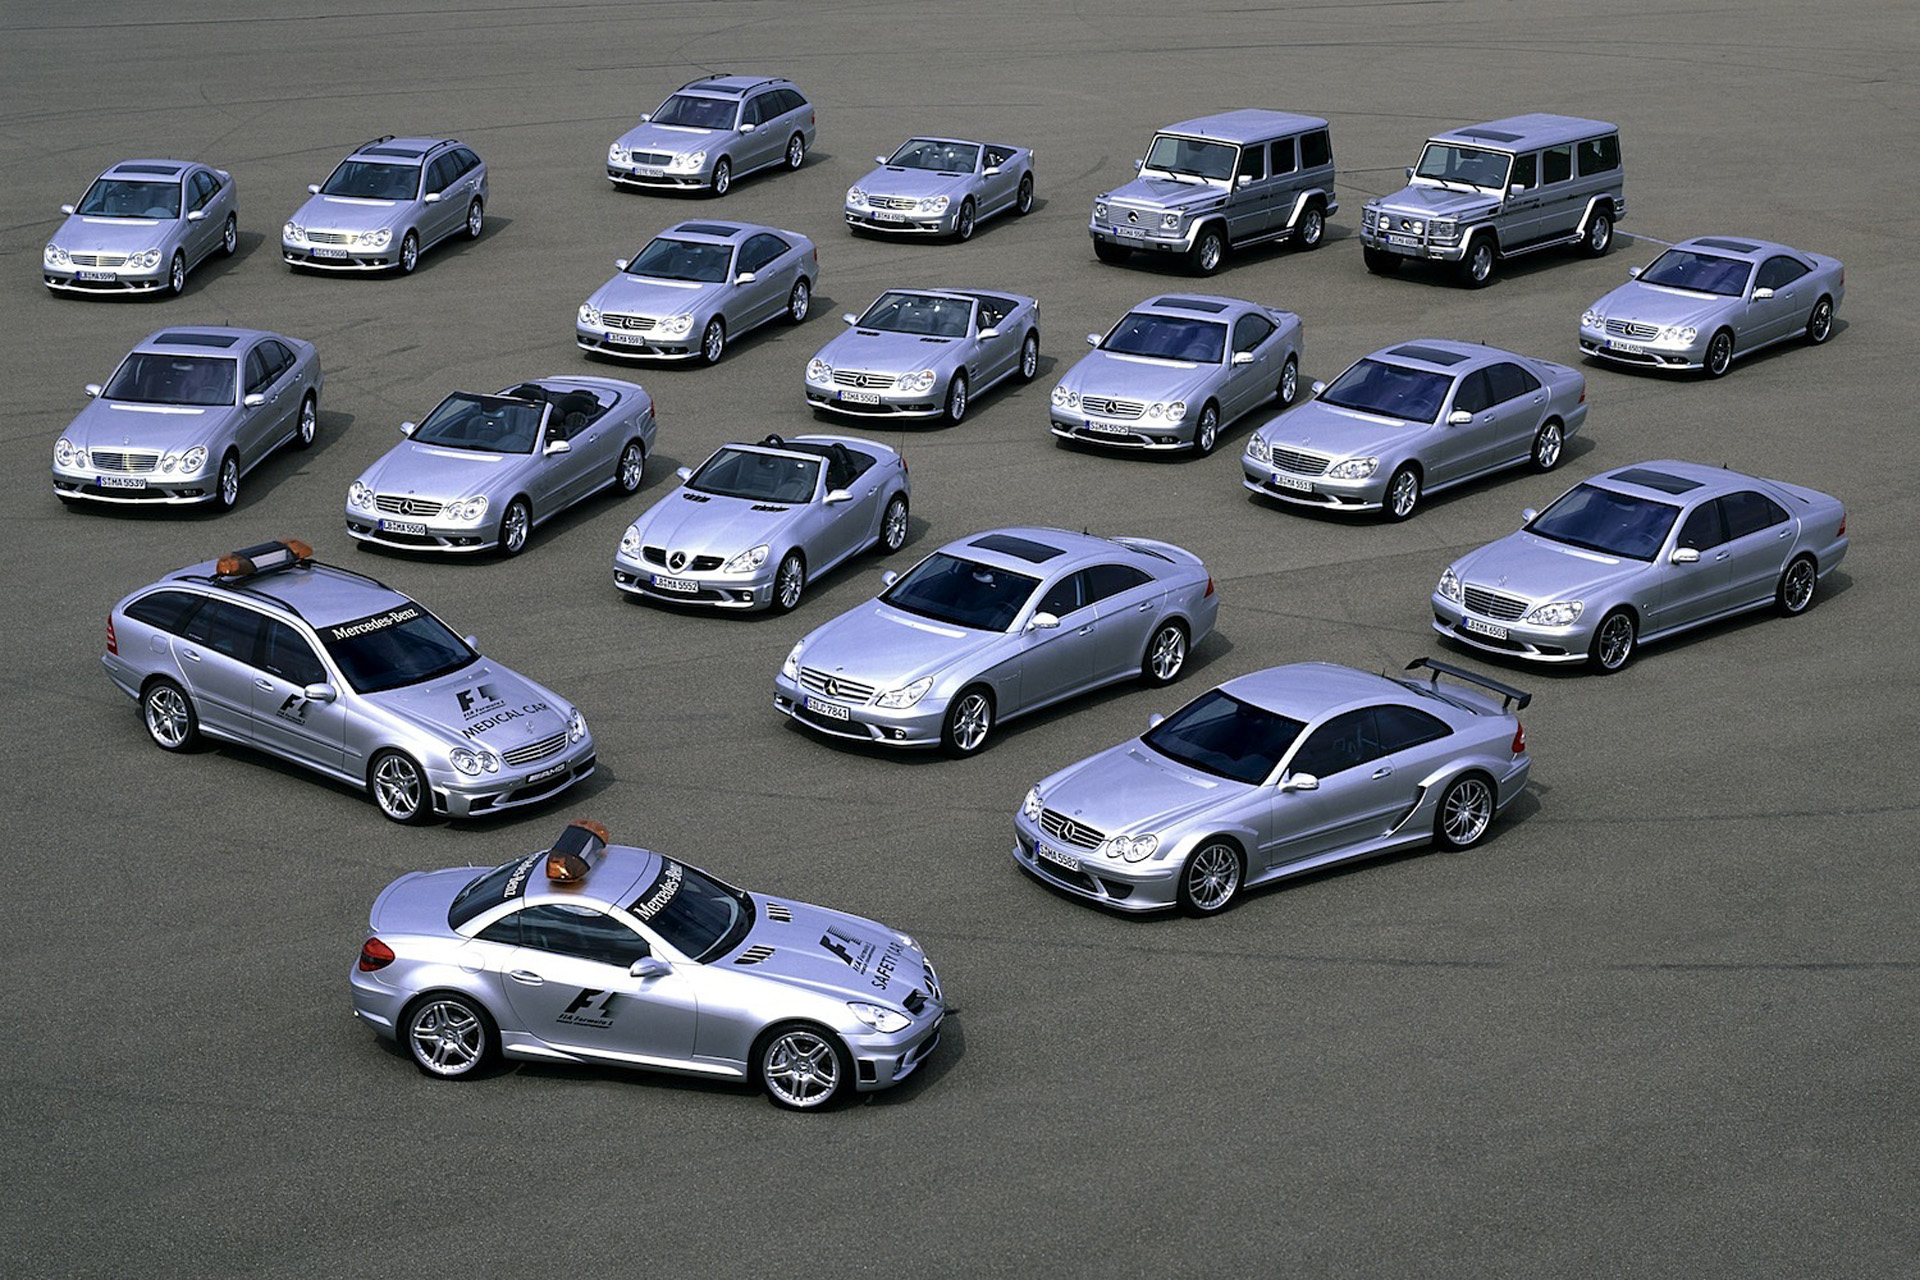 2004-Mercedes-Benz-AMG-Model-Lineup.jpg